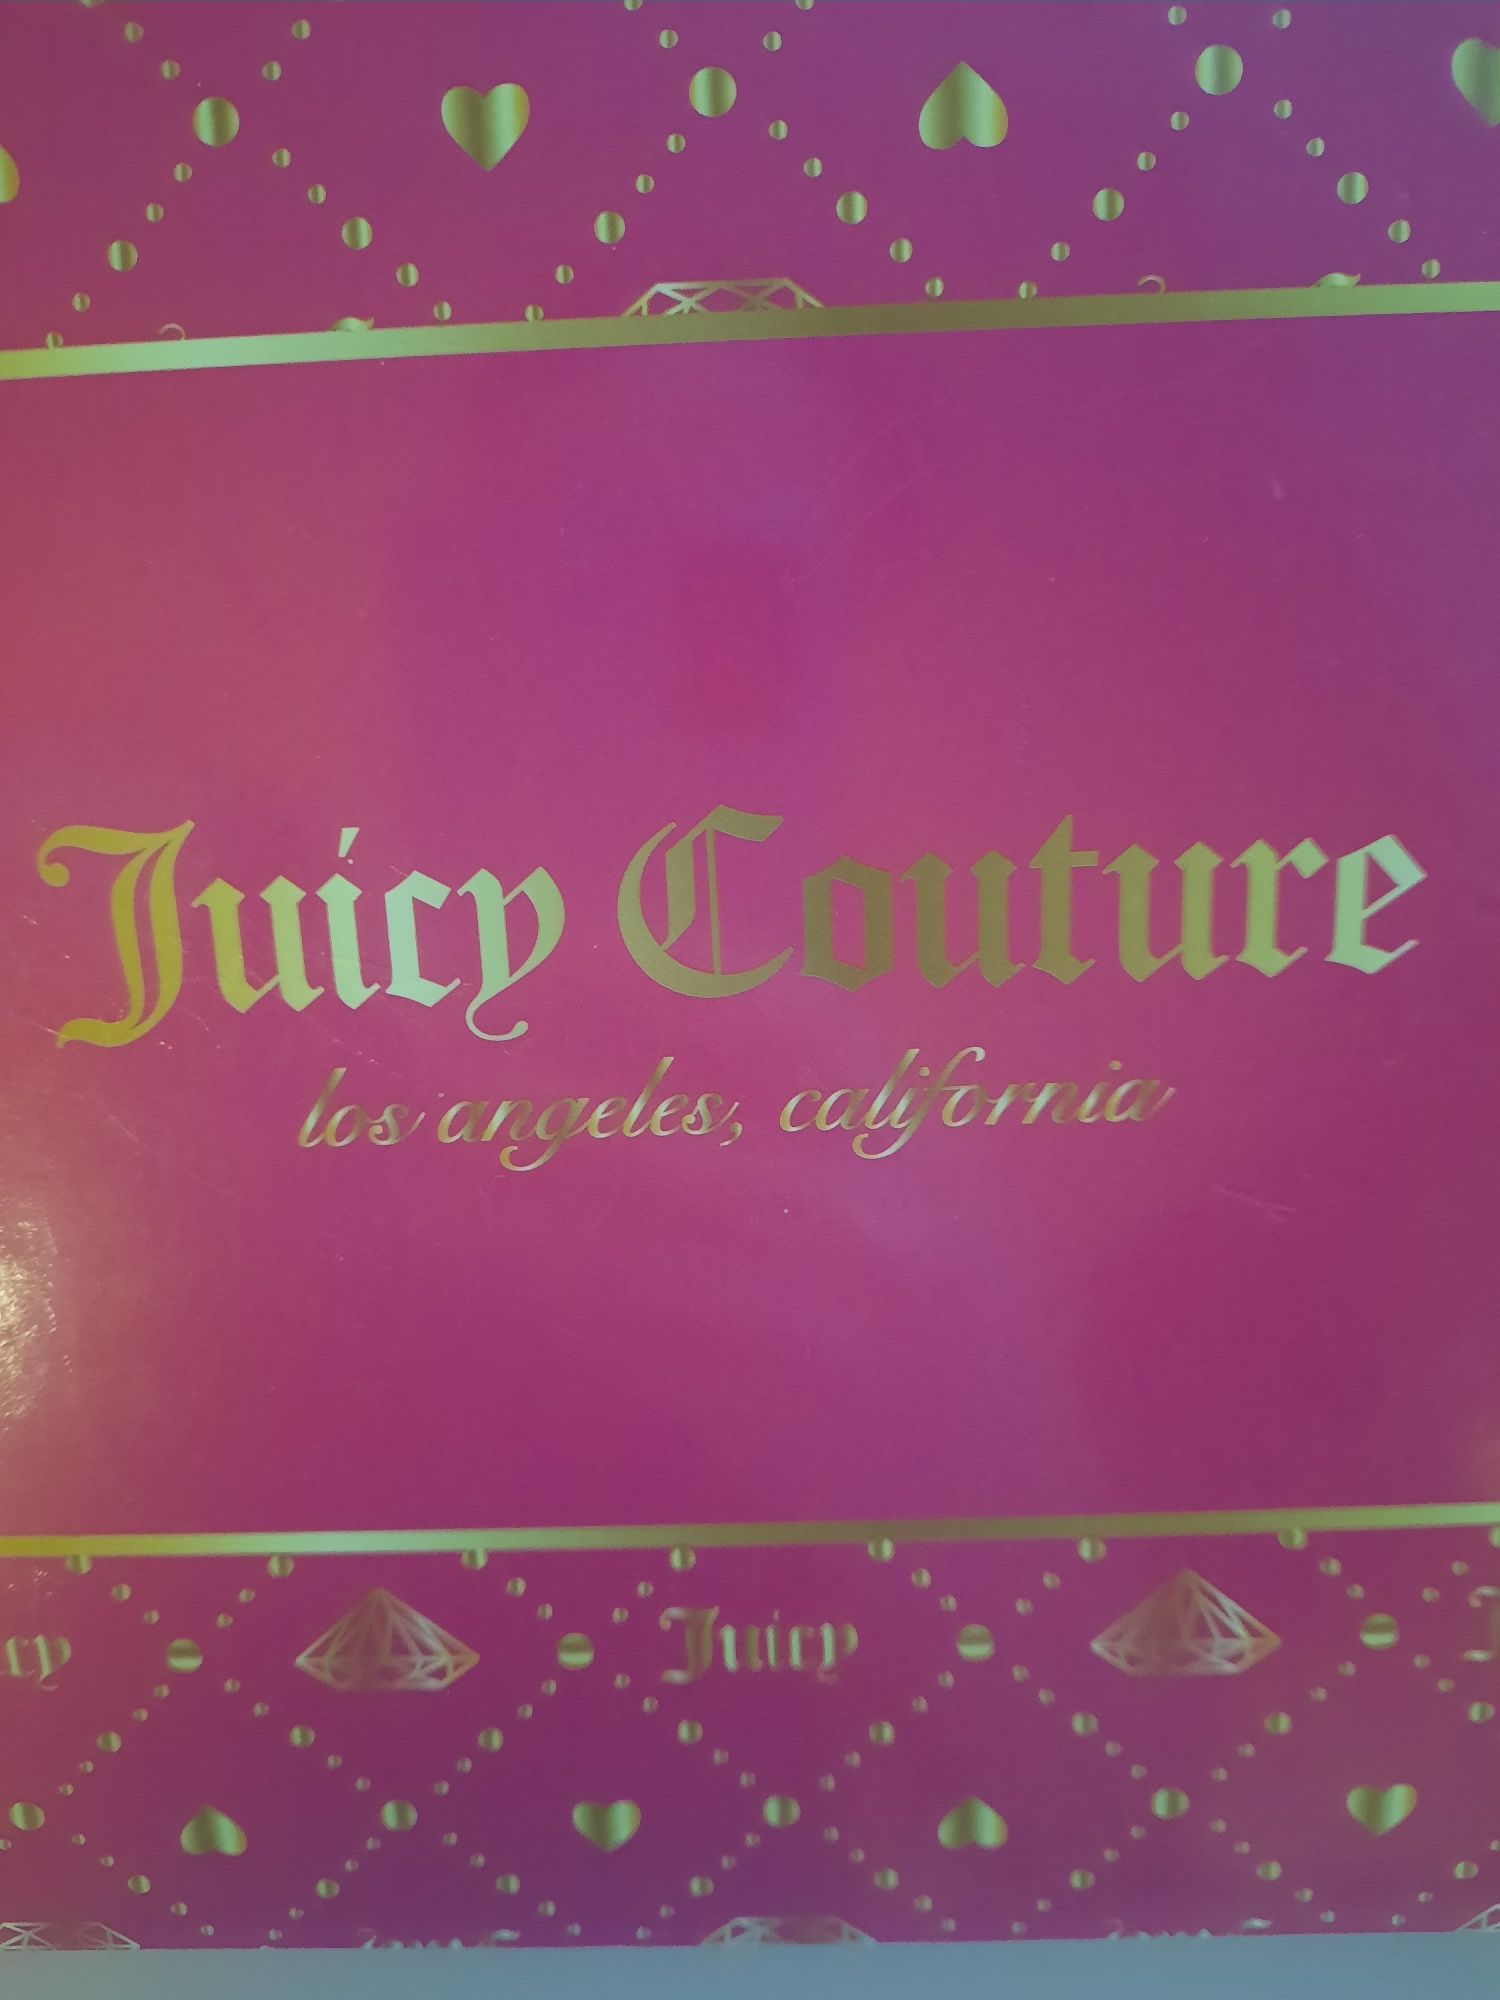 Juicy couture - torebka, brelok